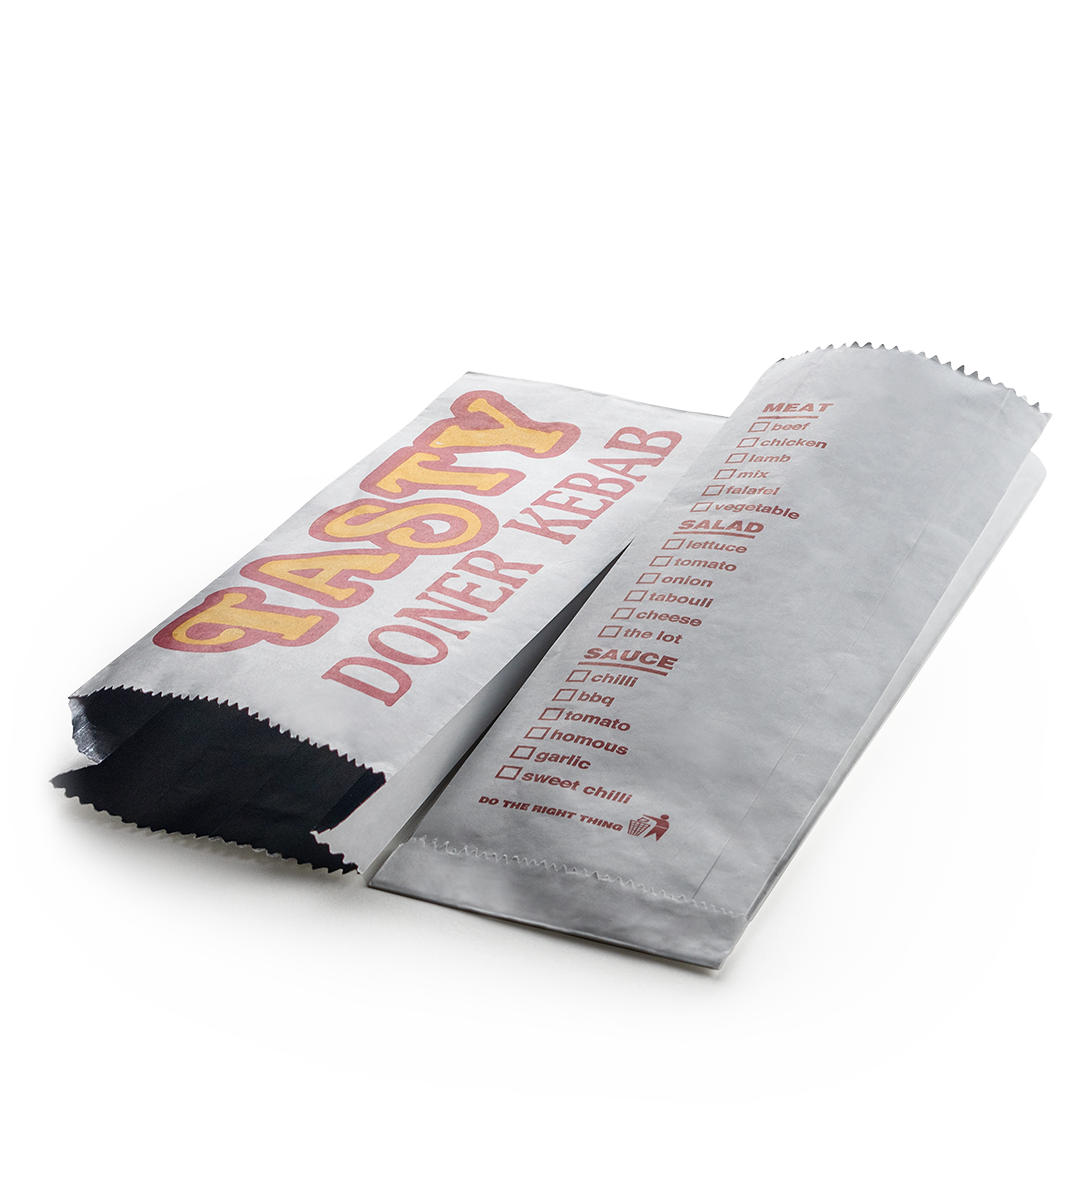 Kebab Bags Foil Lined - Printed Both Sides (Sleeve of 500)